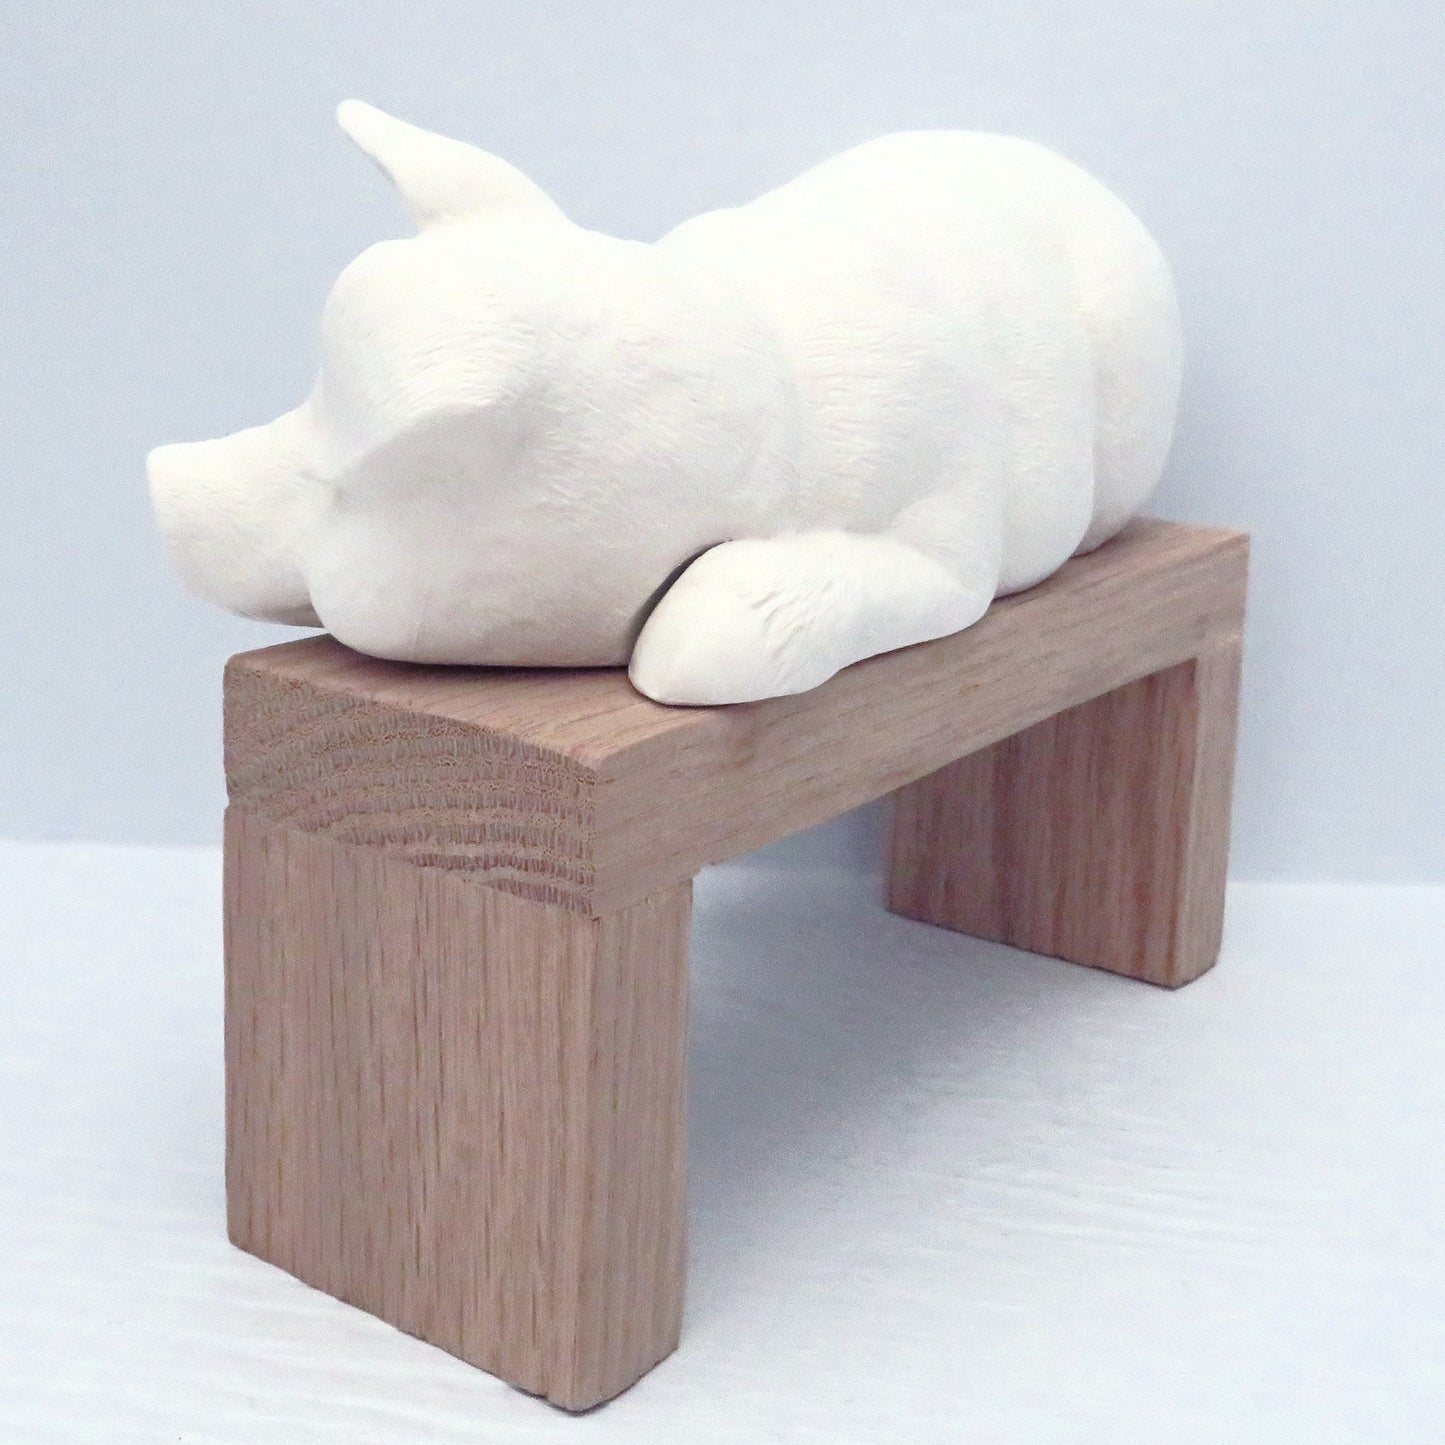 Ready to Paint Ceramic Bisque Shelf Sleeper Pig Figurine / Paintable Ceramic Pig Statue / Ceramics to Paint / Pig Lover Gift / Farm Decor